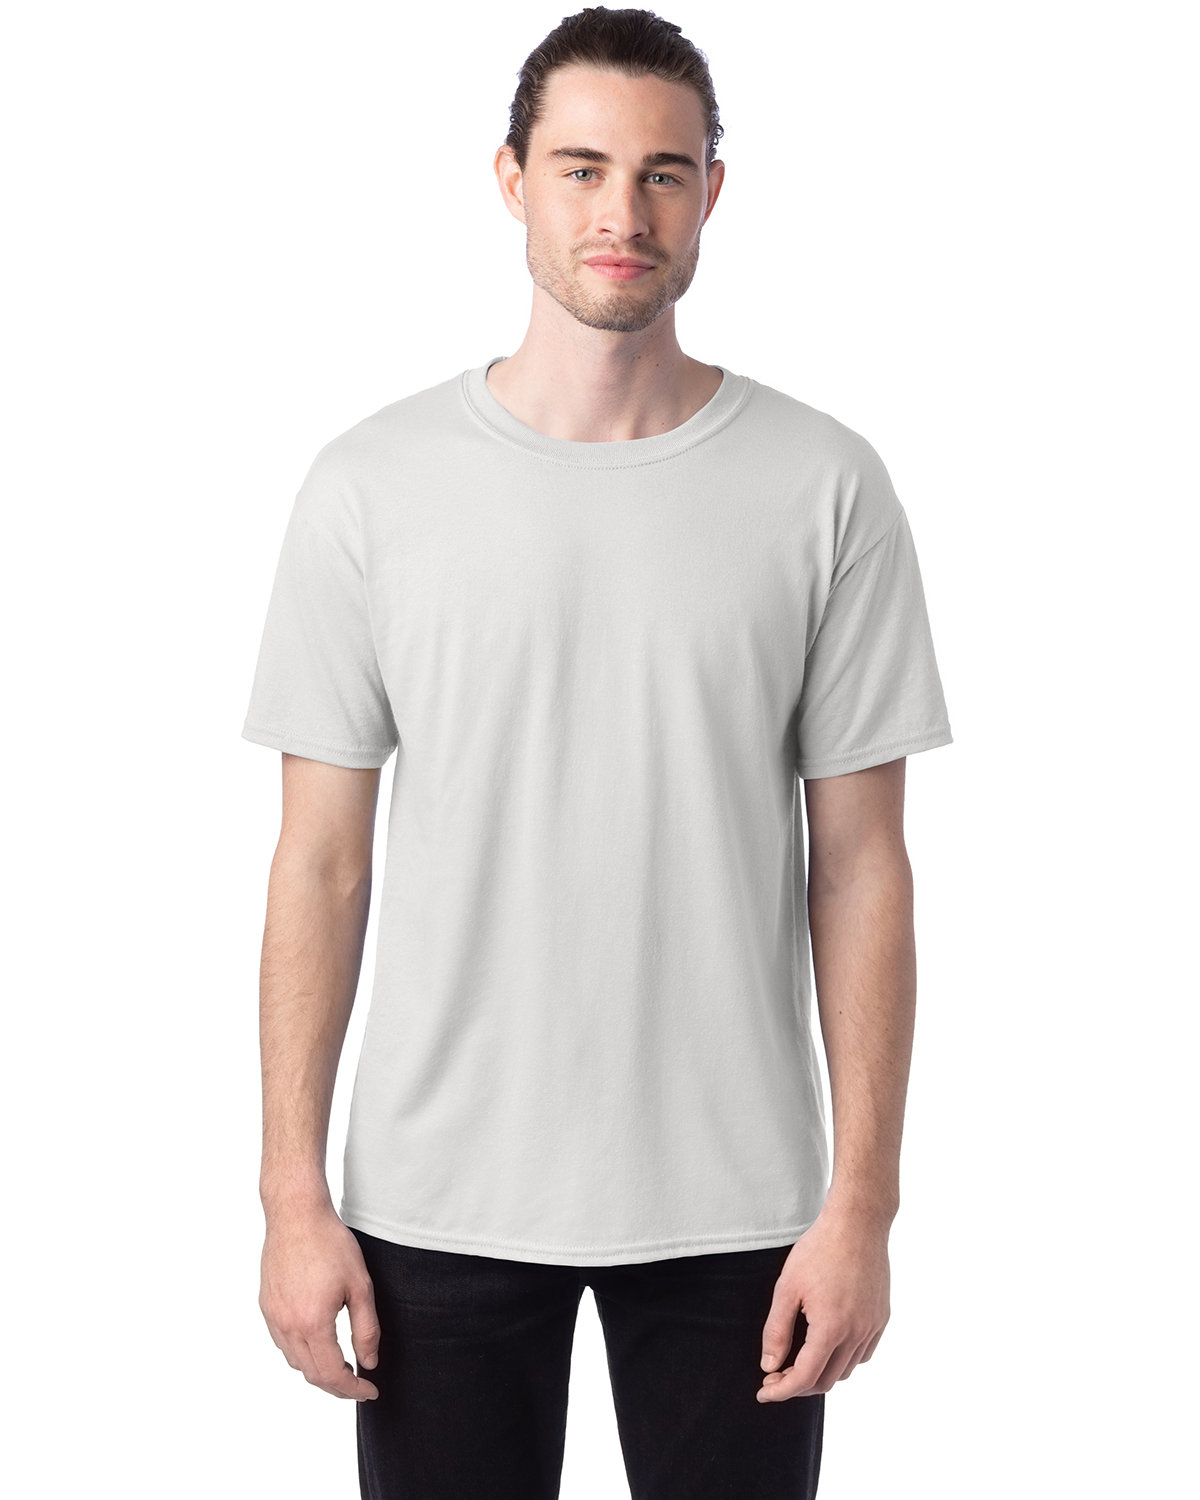 Hanes Mens Short Sleeve Tagless T Shirt  S M L XL 2XL 3X 4XL 5XL 5250 